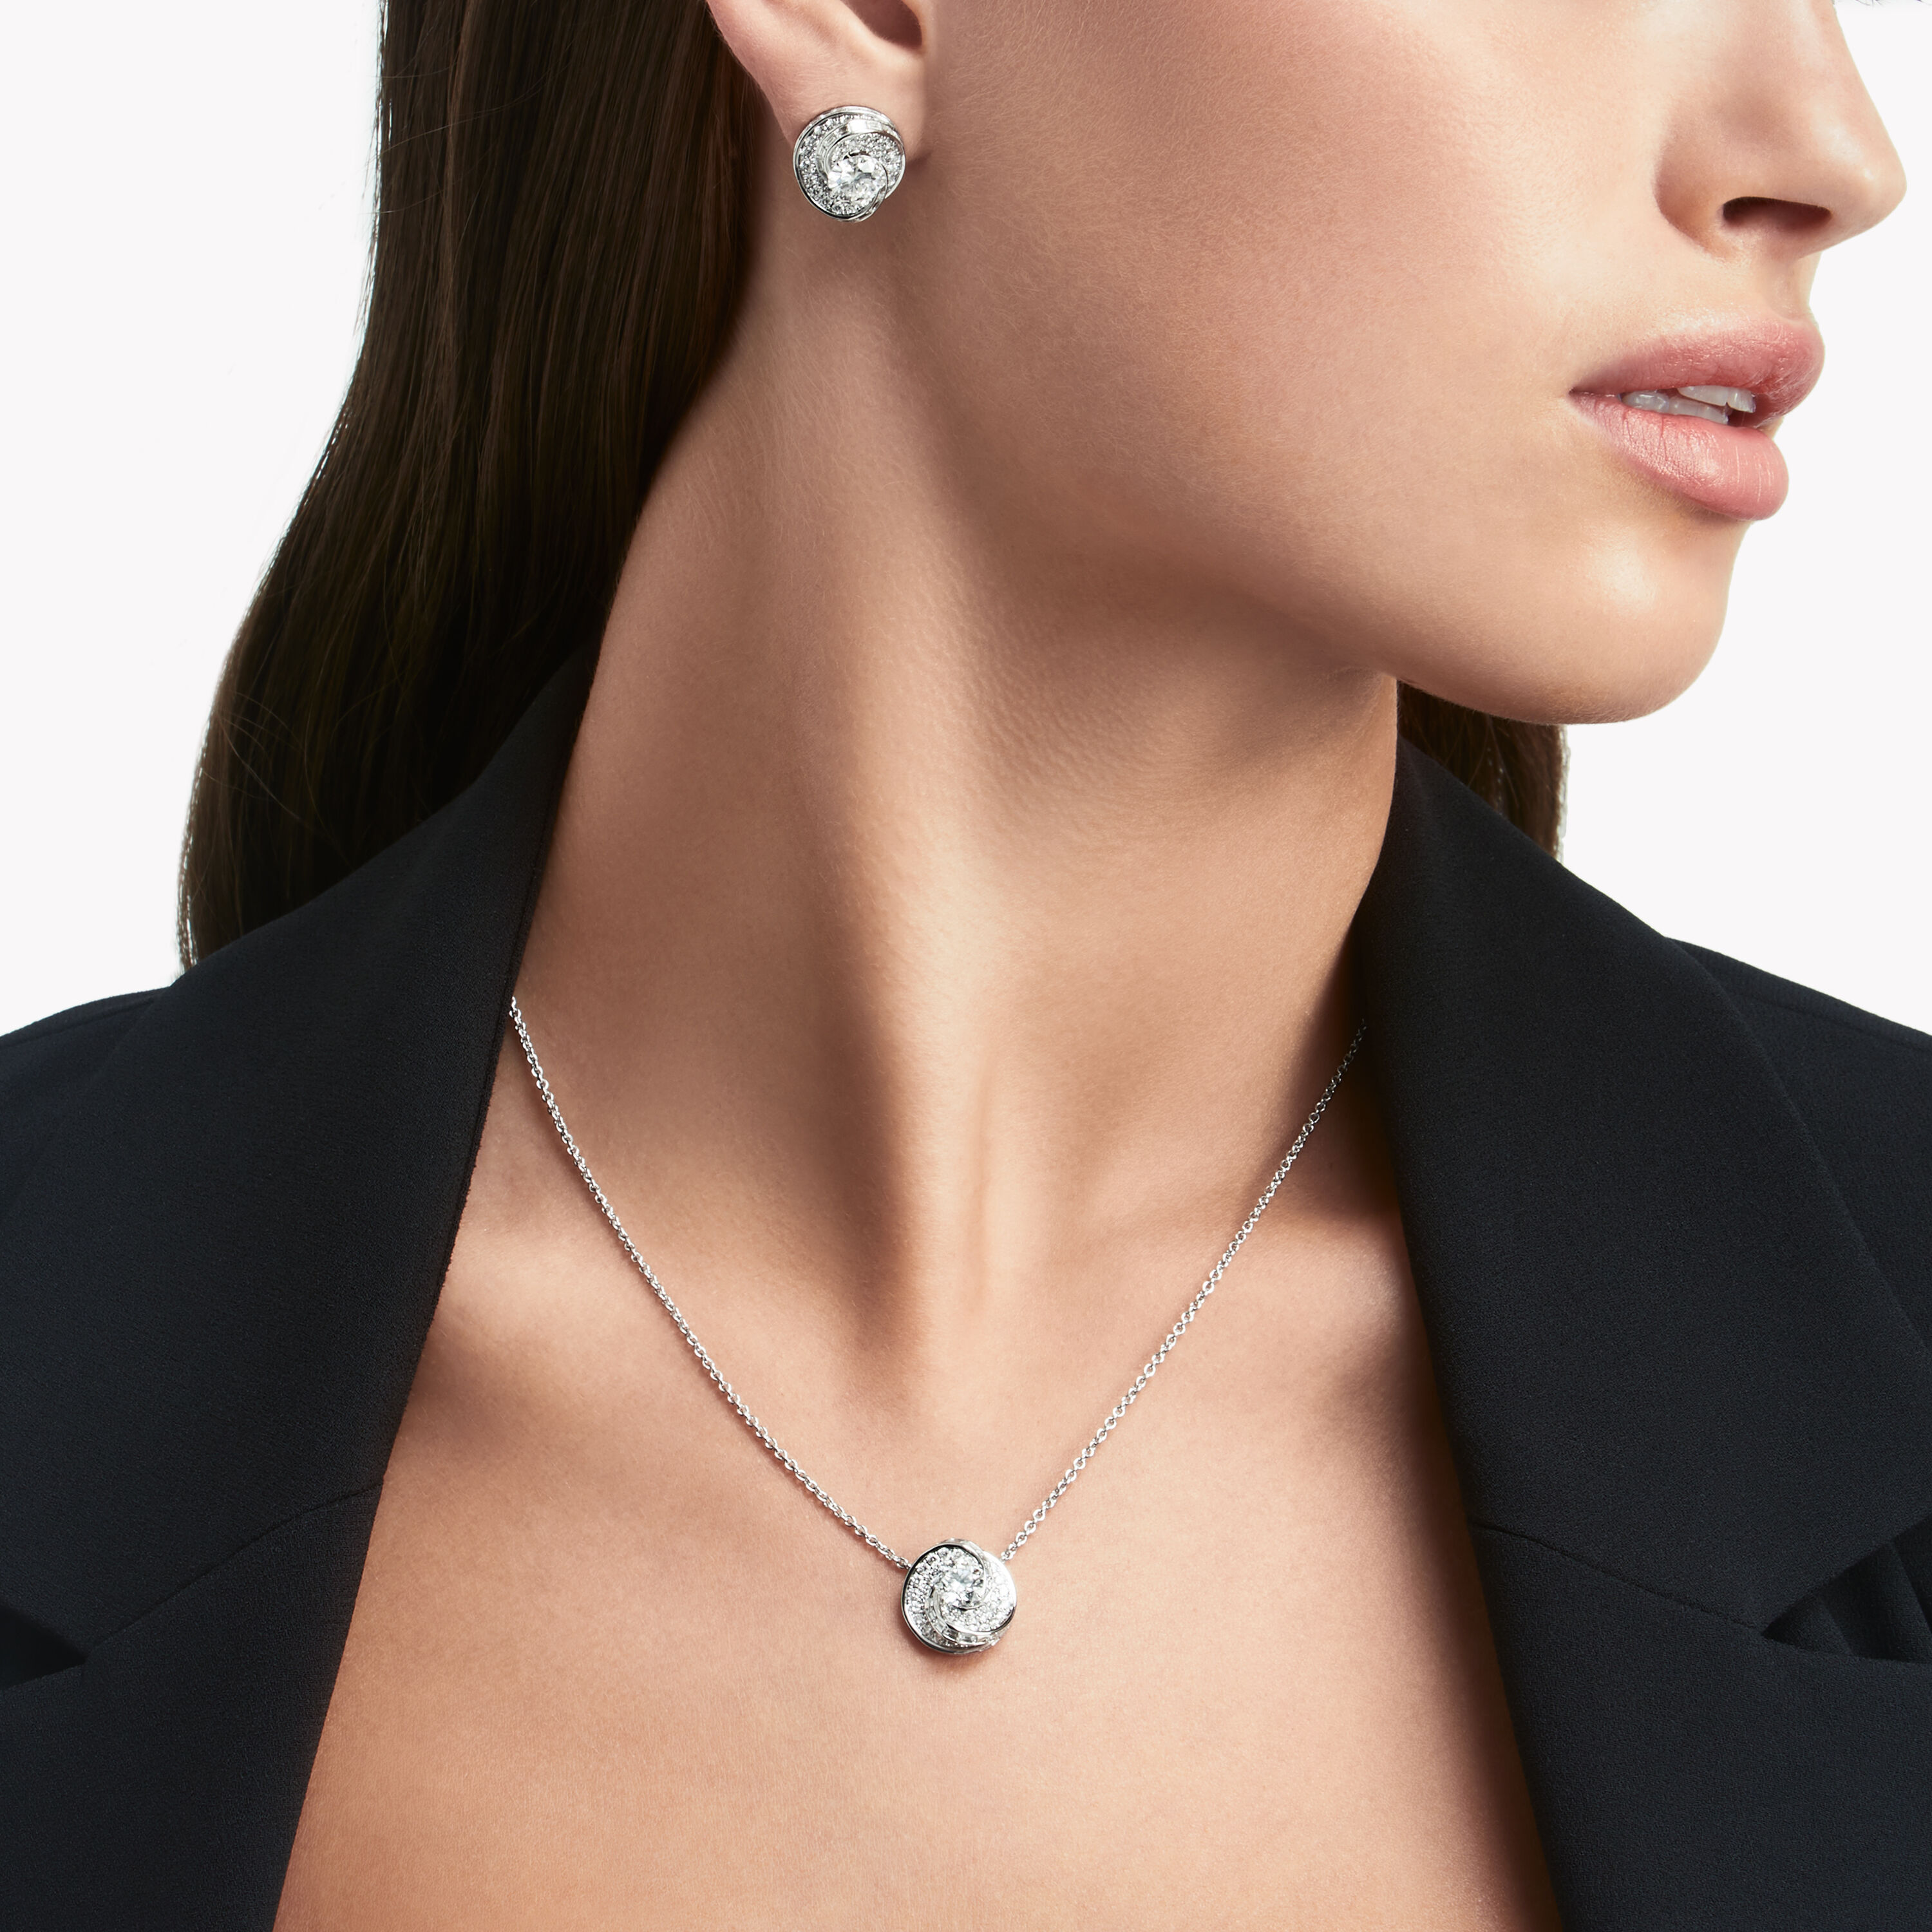 1ct Moissanite Diamond Pendant Necklace - Shraddha Shree Gems